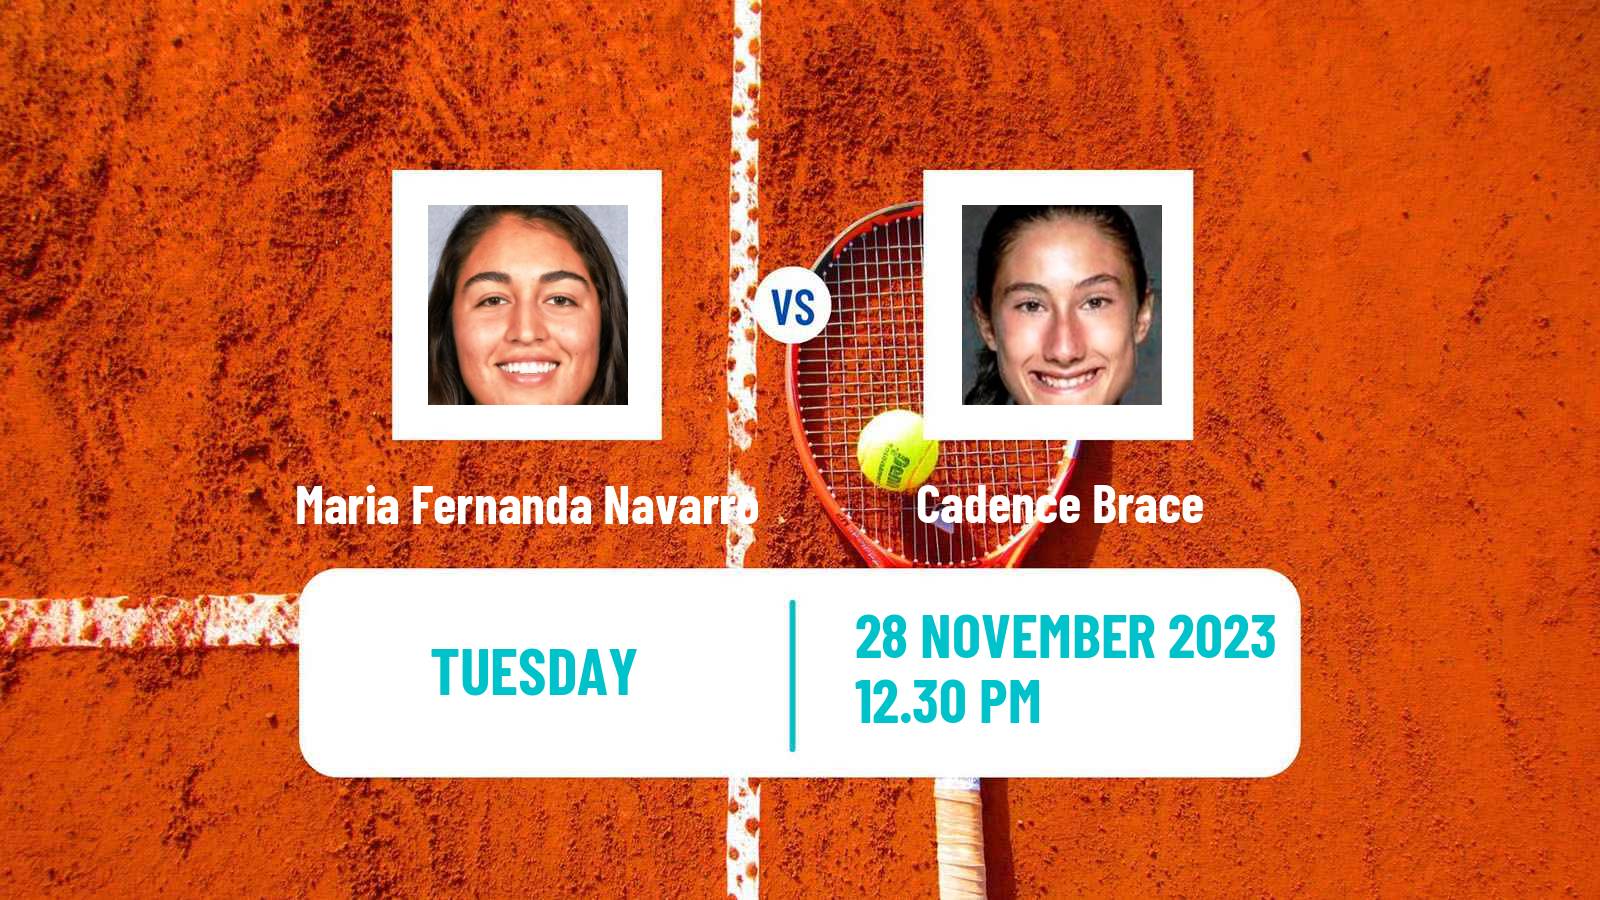 Tennis ITF W40 Veracruz Women Maria Fernanda Navarro - Cadence Brace